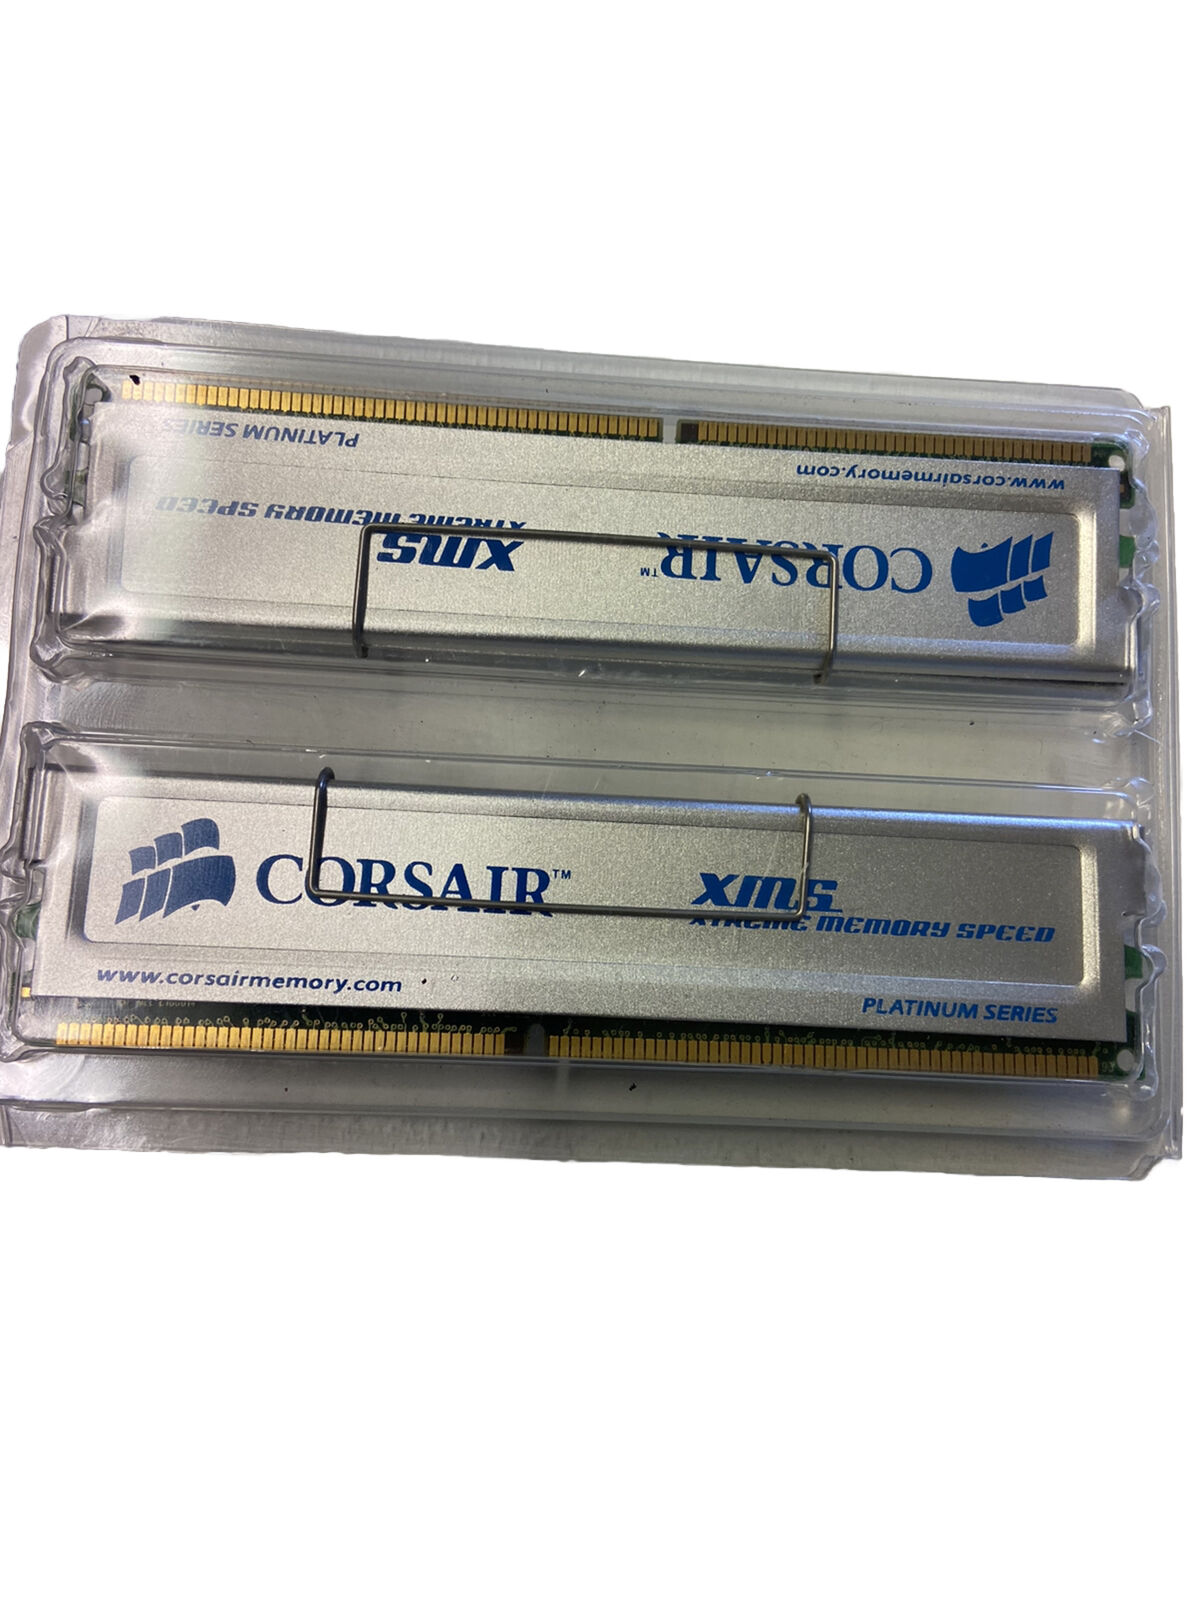 CORSAIR XMS Platinum Series Memory CMX512-3200C2PT XMS3200 512MB 400MHz NEW